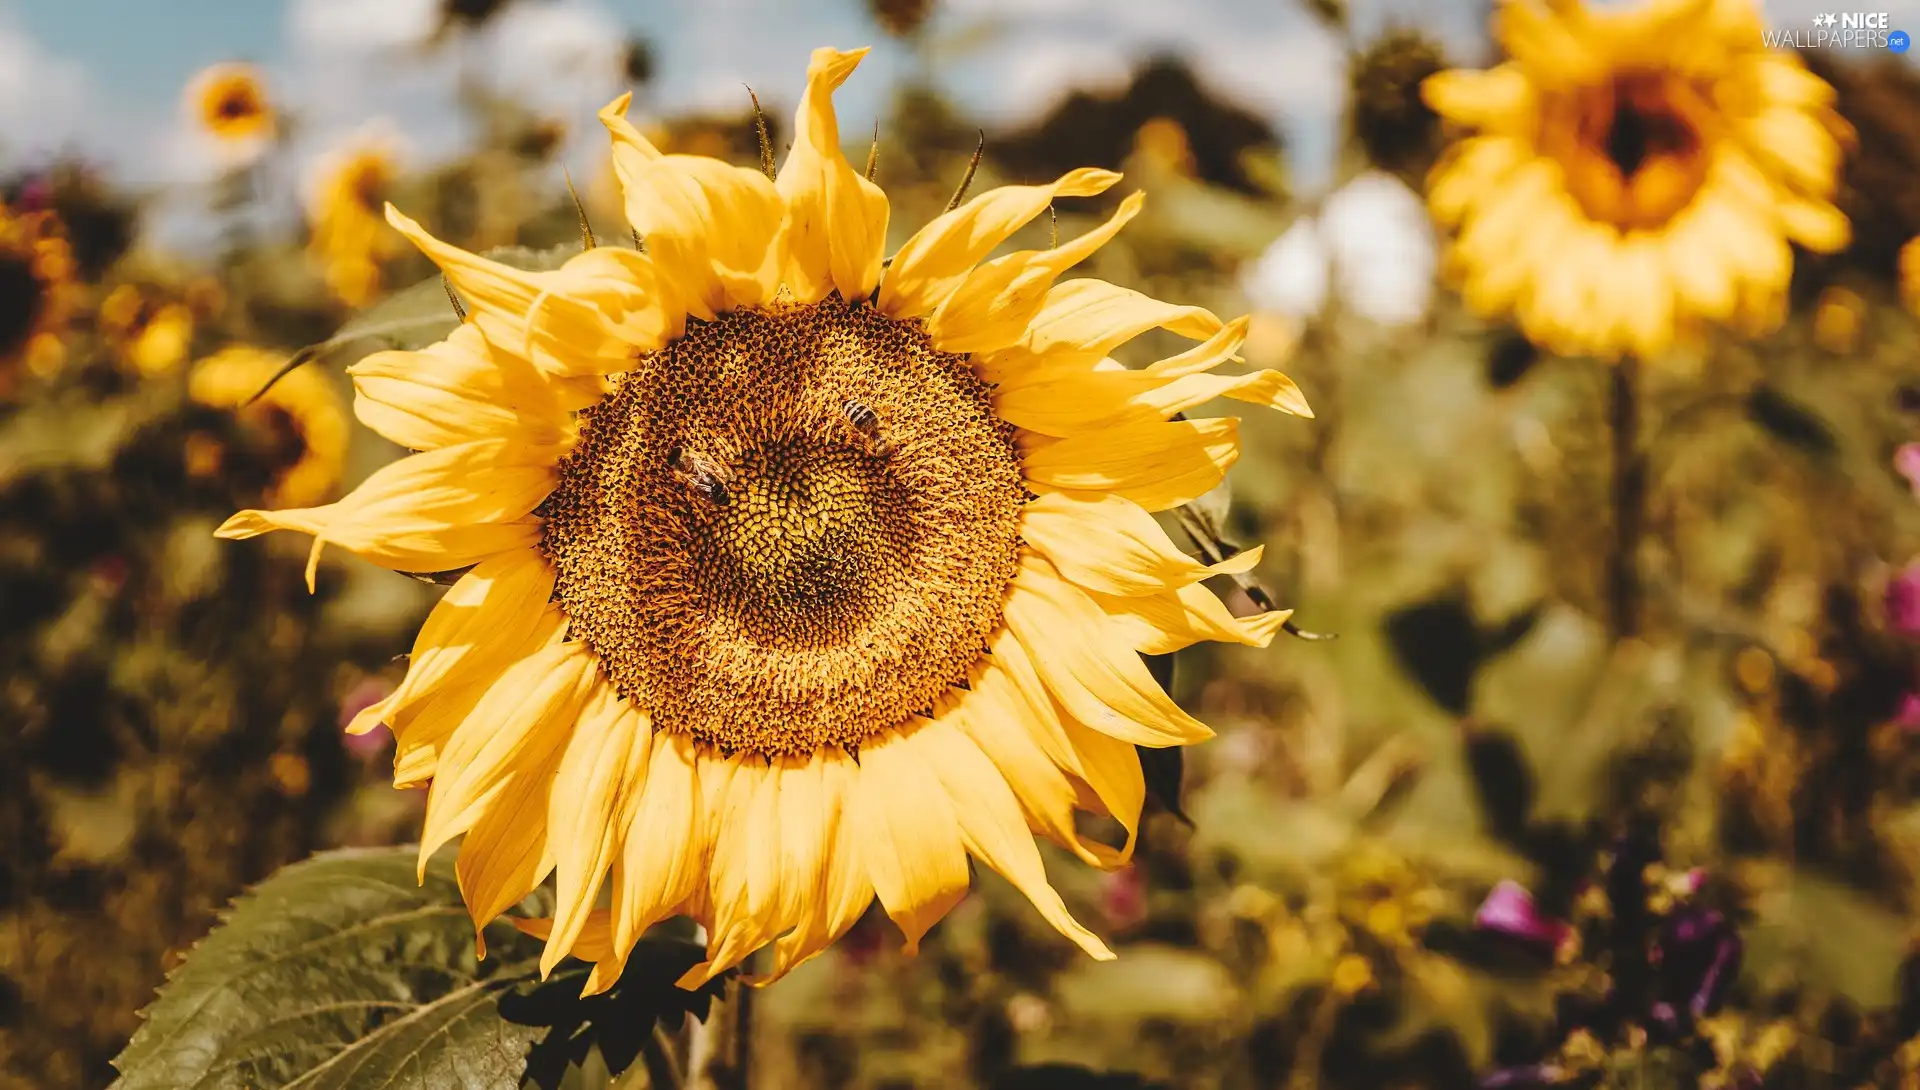 Sunflower, Bees